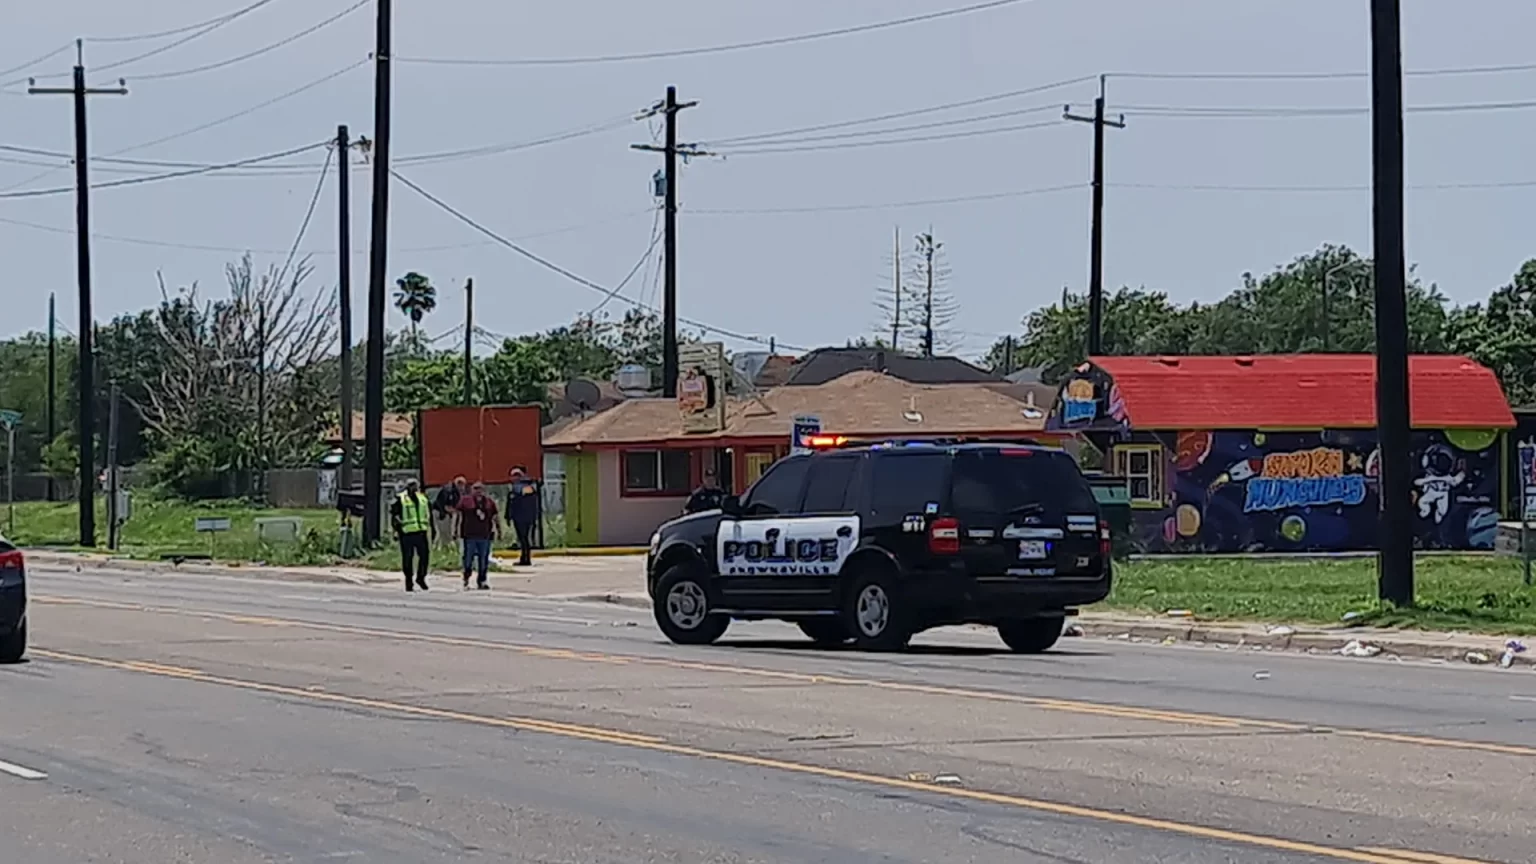 Car strikes people in Texas border town, killing 8 people 